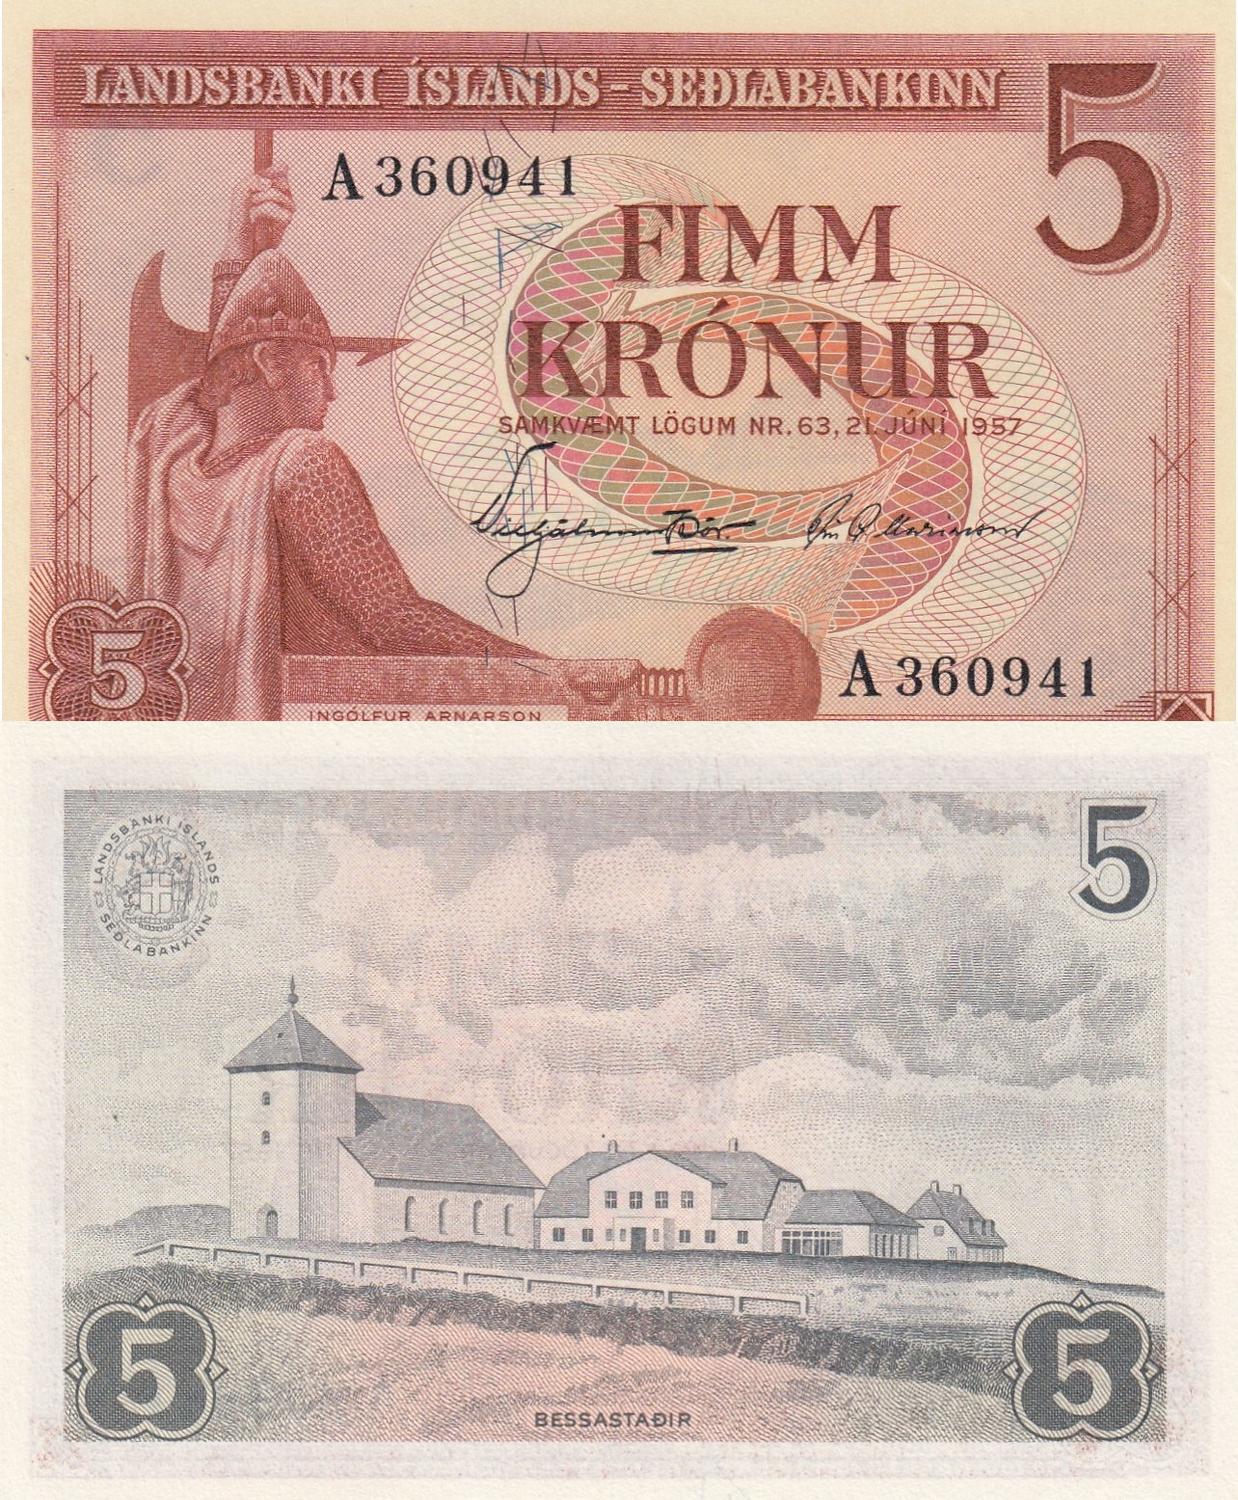 ICELAND 100 KRONUR 1957 P 40 UNC